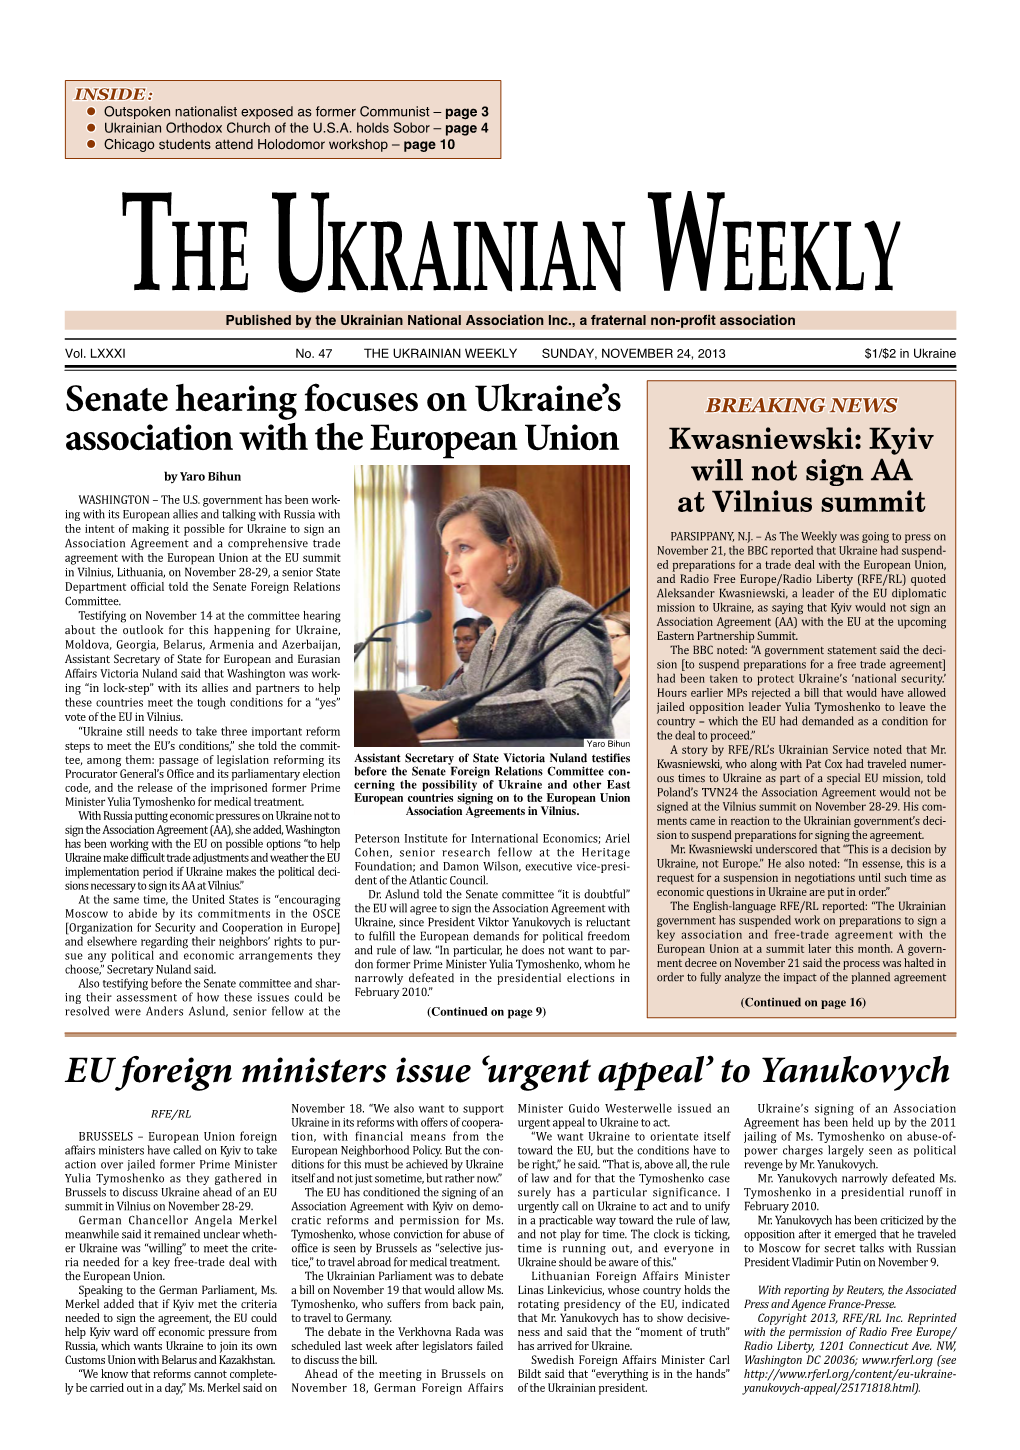 Senate Hearing Focuses on Ukraine's Association with the European Union